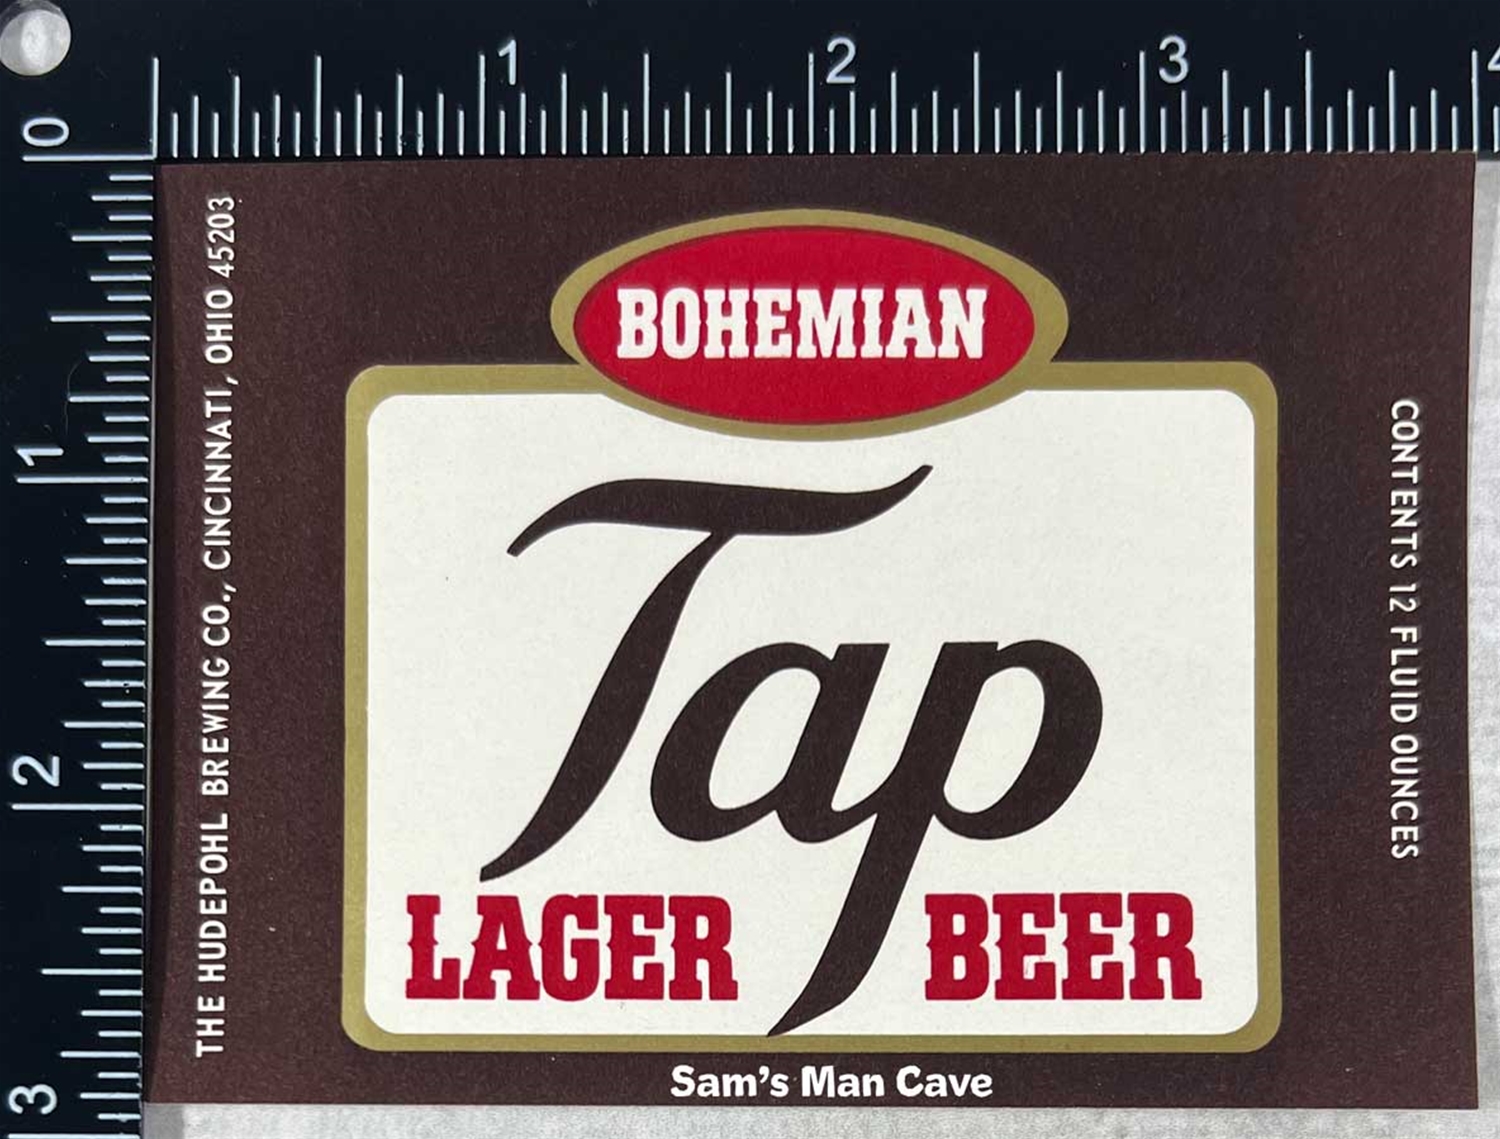 Bohemian Tap Lager Beer Label